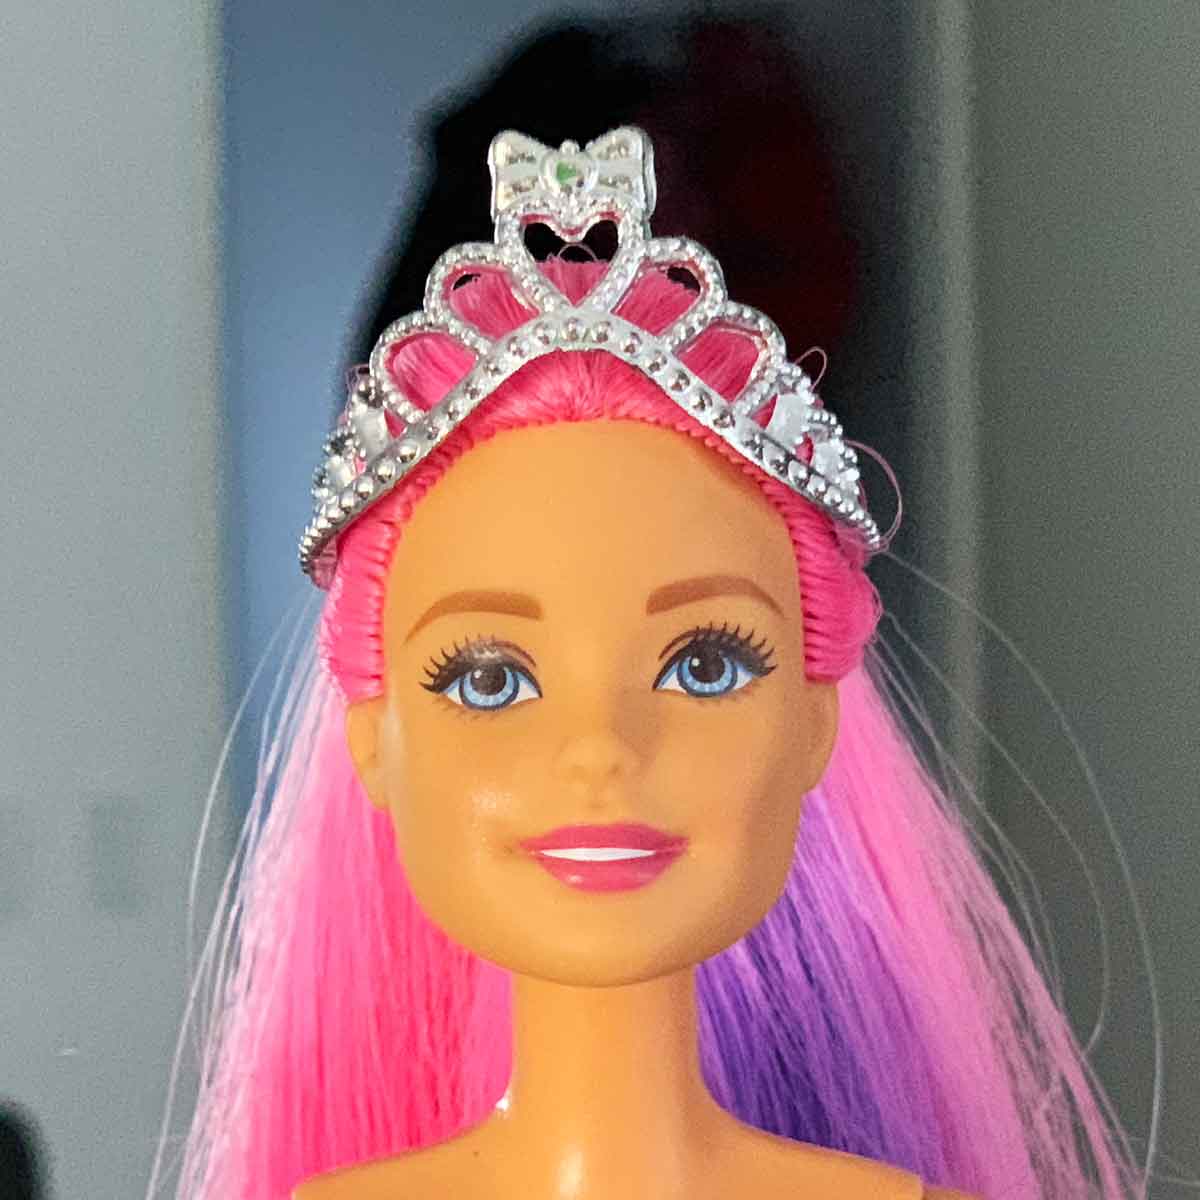 Barbie prinsessenkroon zilver spikkelmotief en grote strik